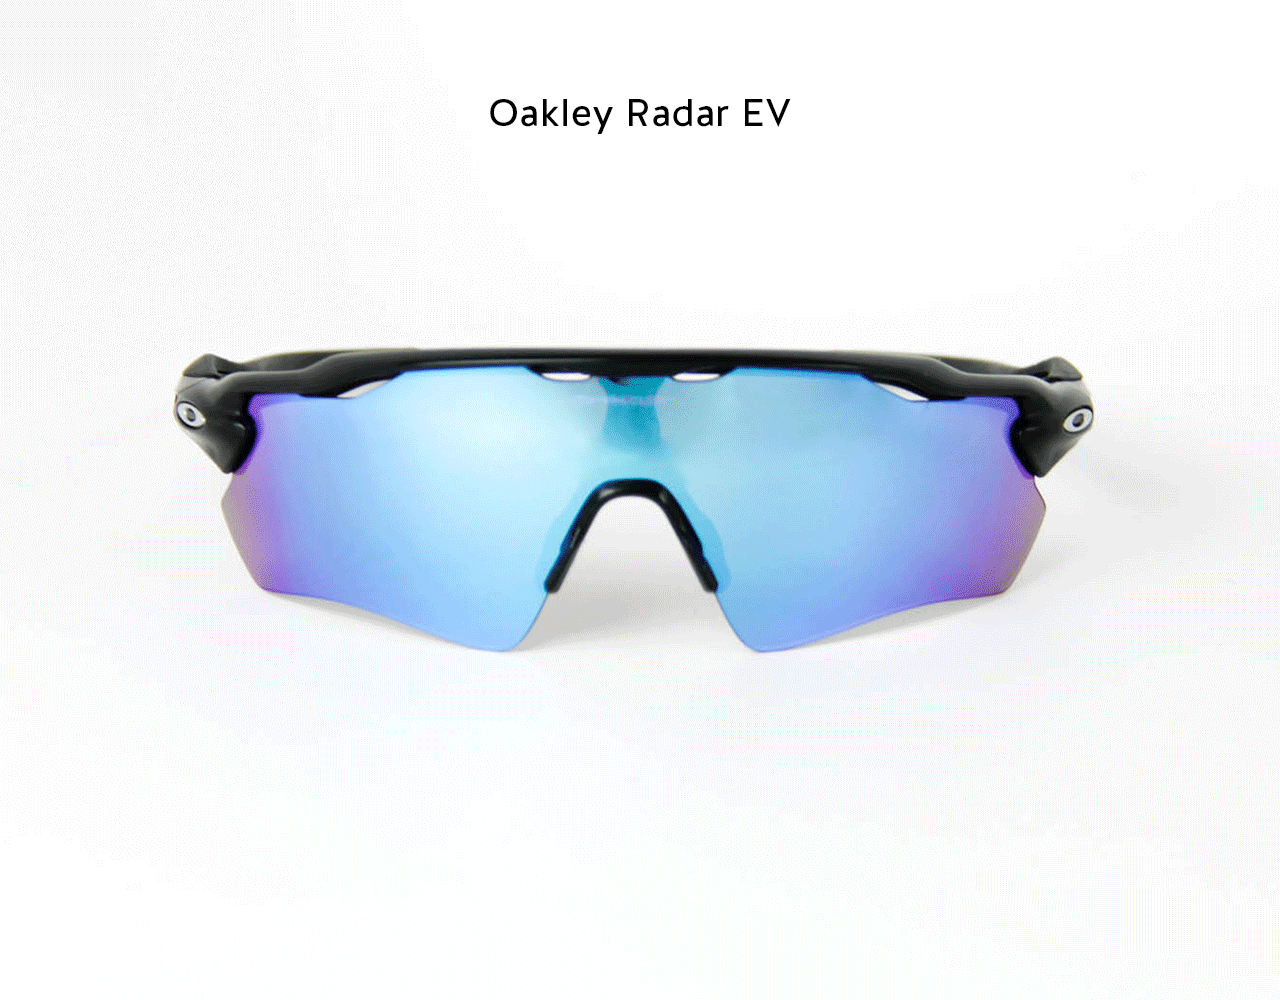 Full spinning view of Oakley Radar EV Sunglasses